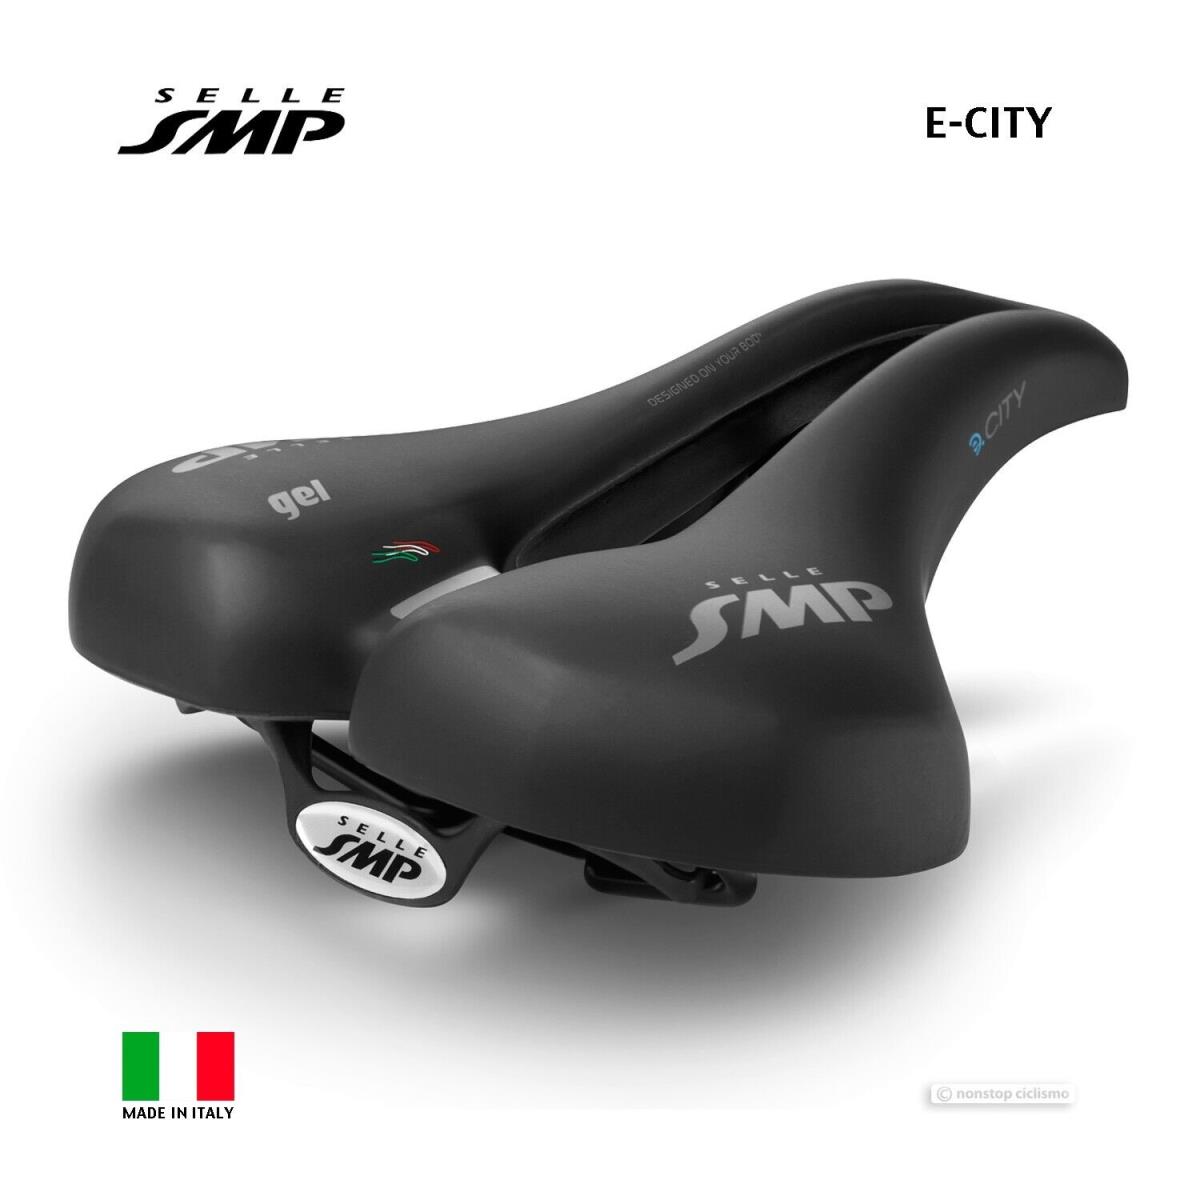 Selle Smp E-city E-bike Saddle : Black - Made IN Italy